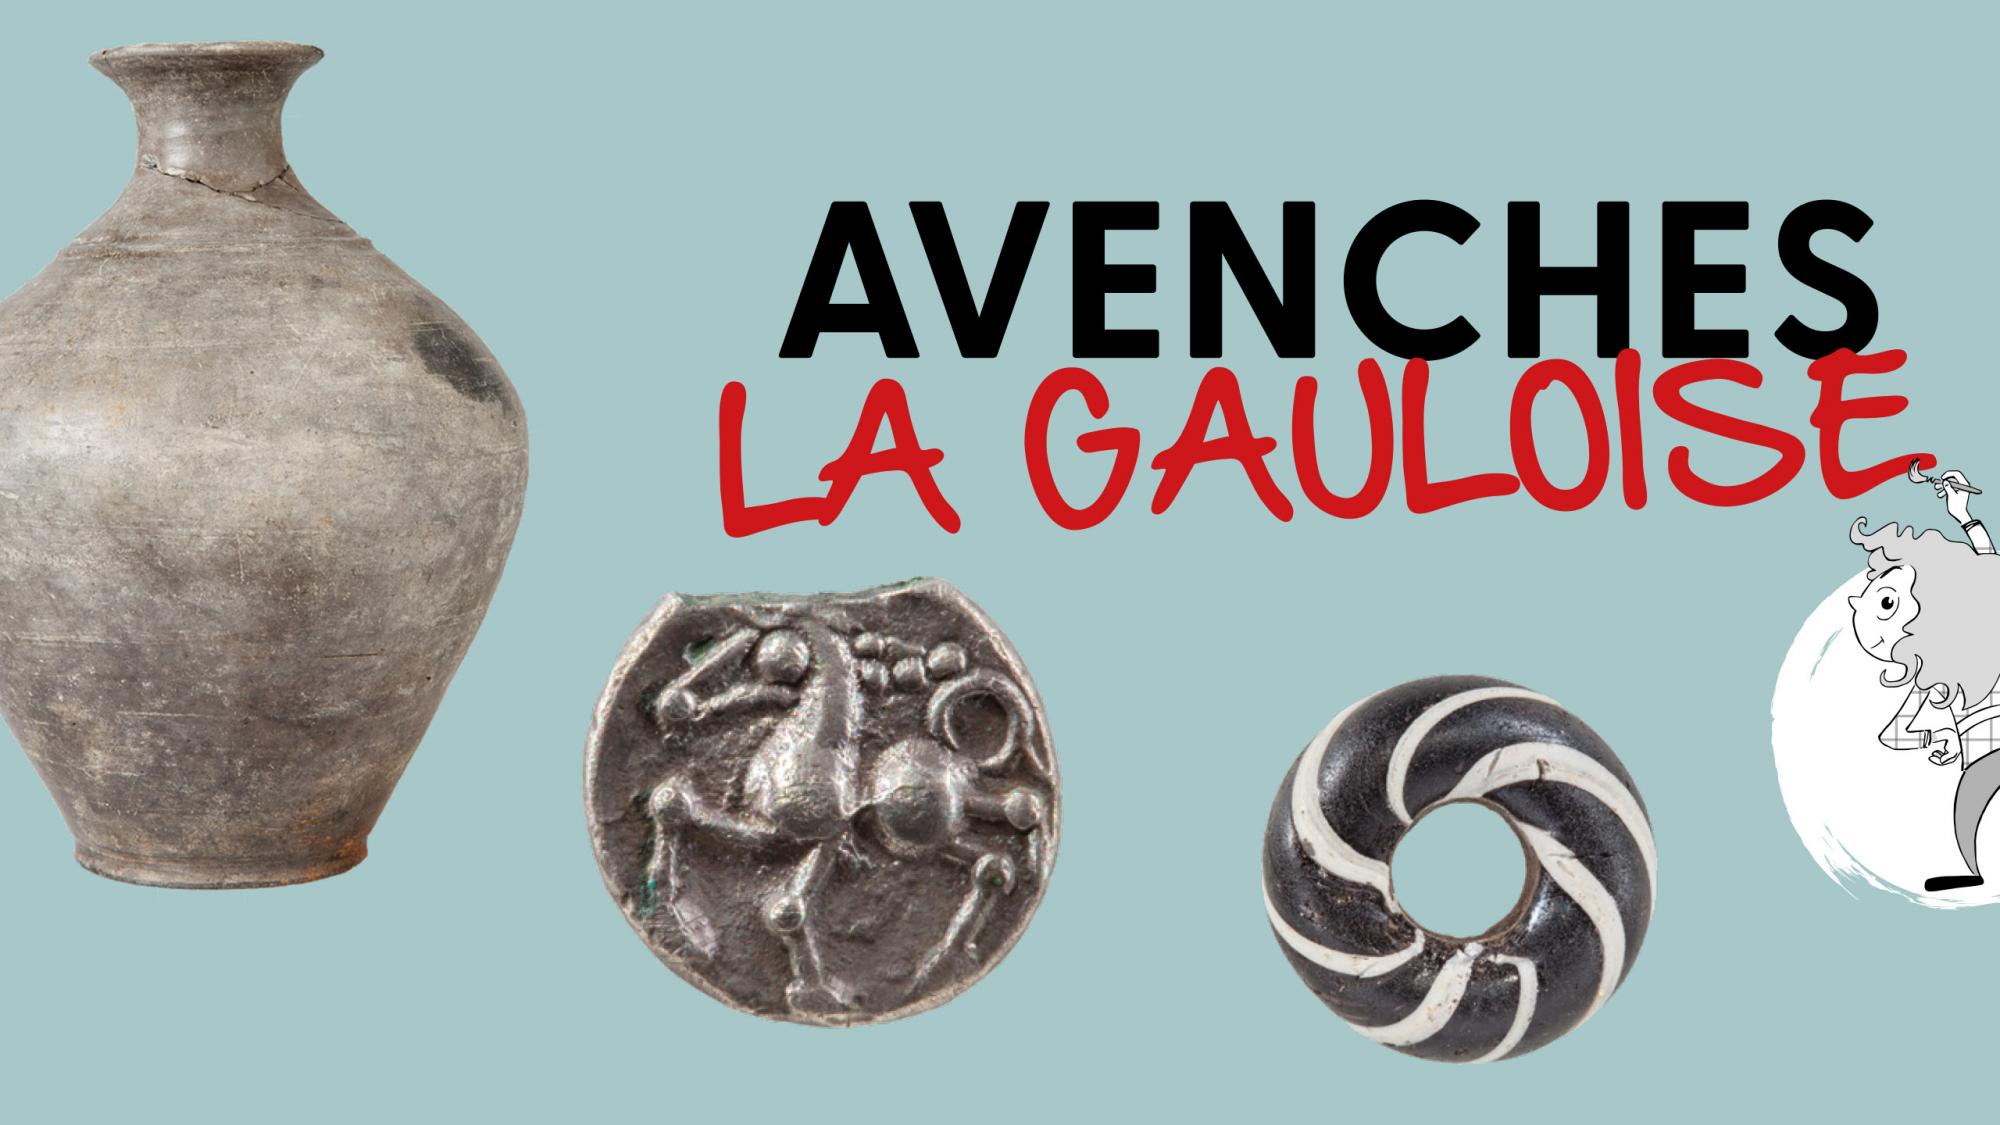 Avenches the Gauloise